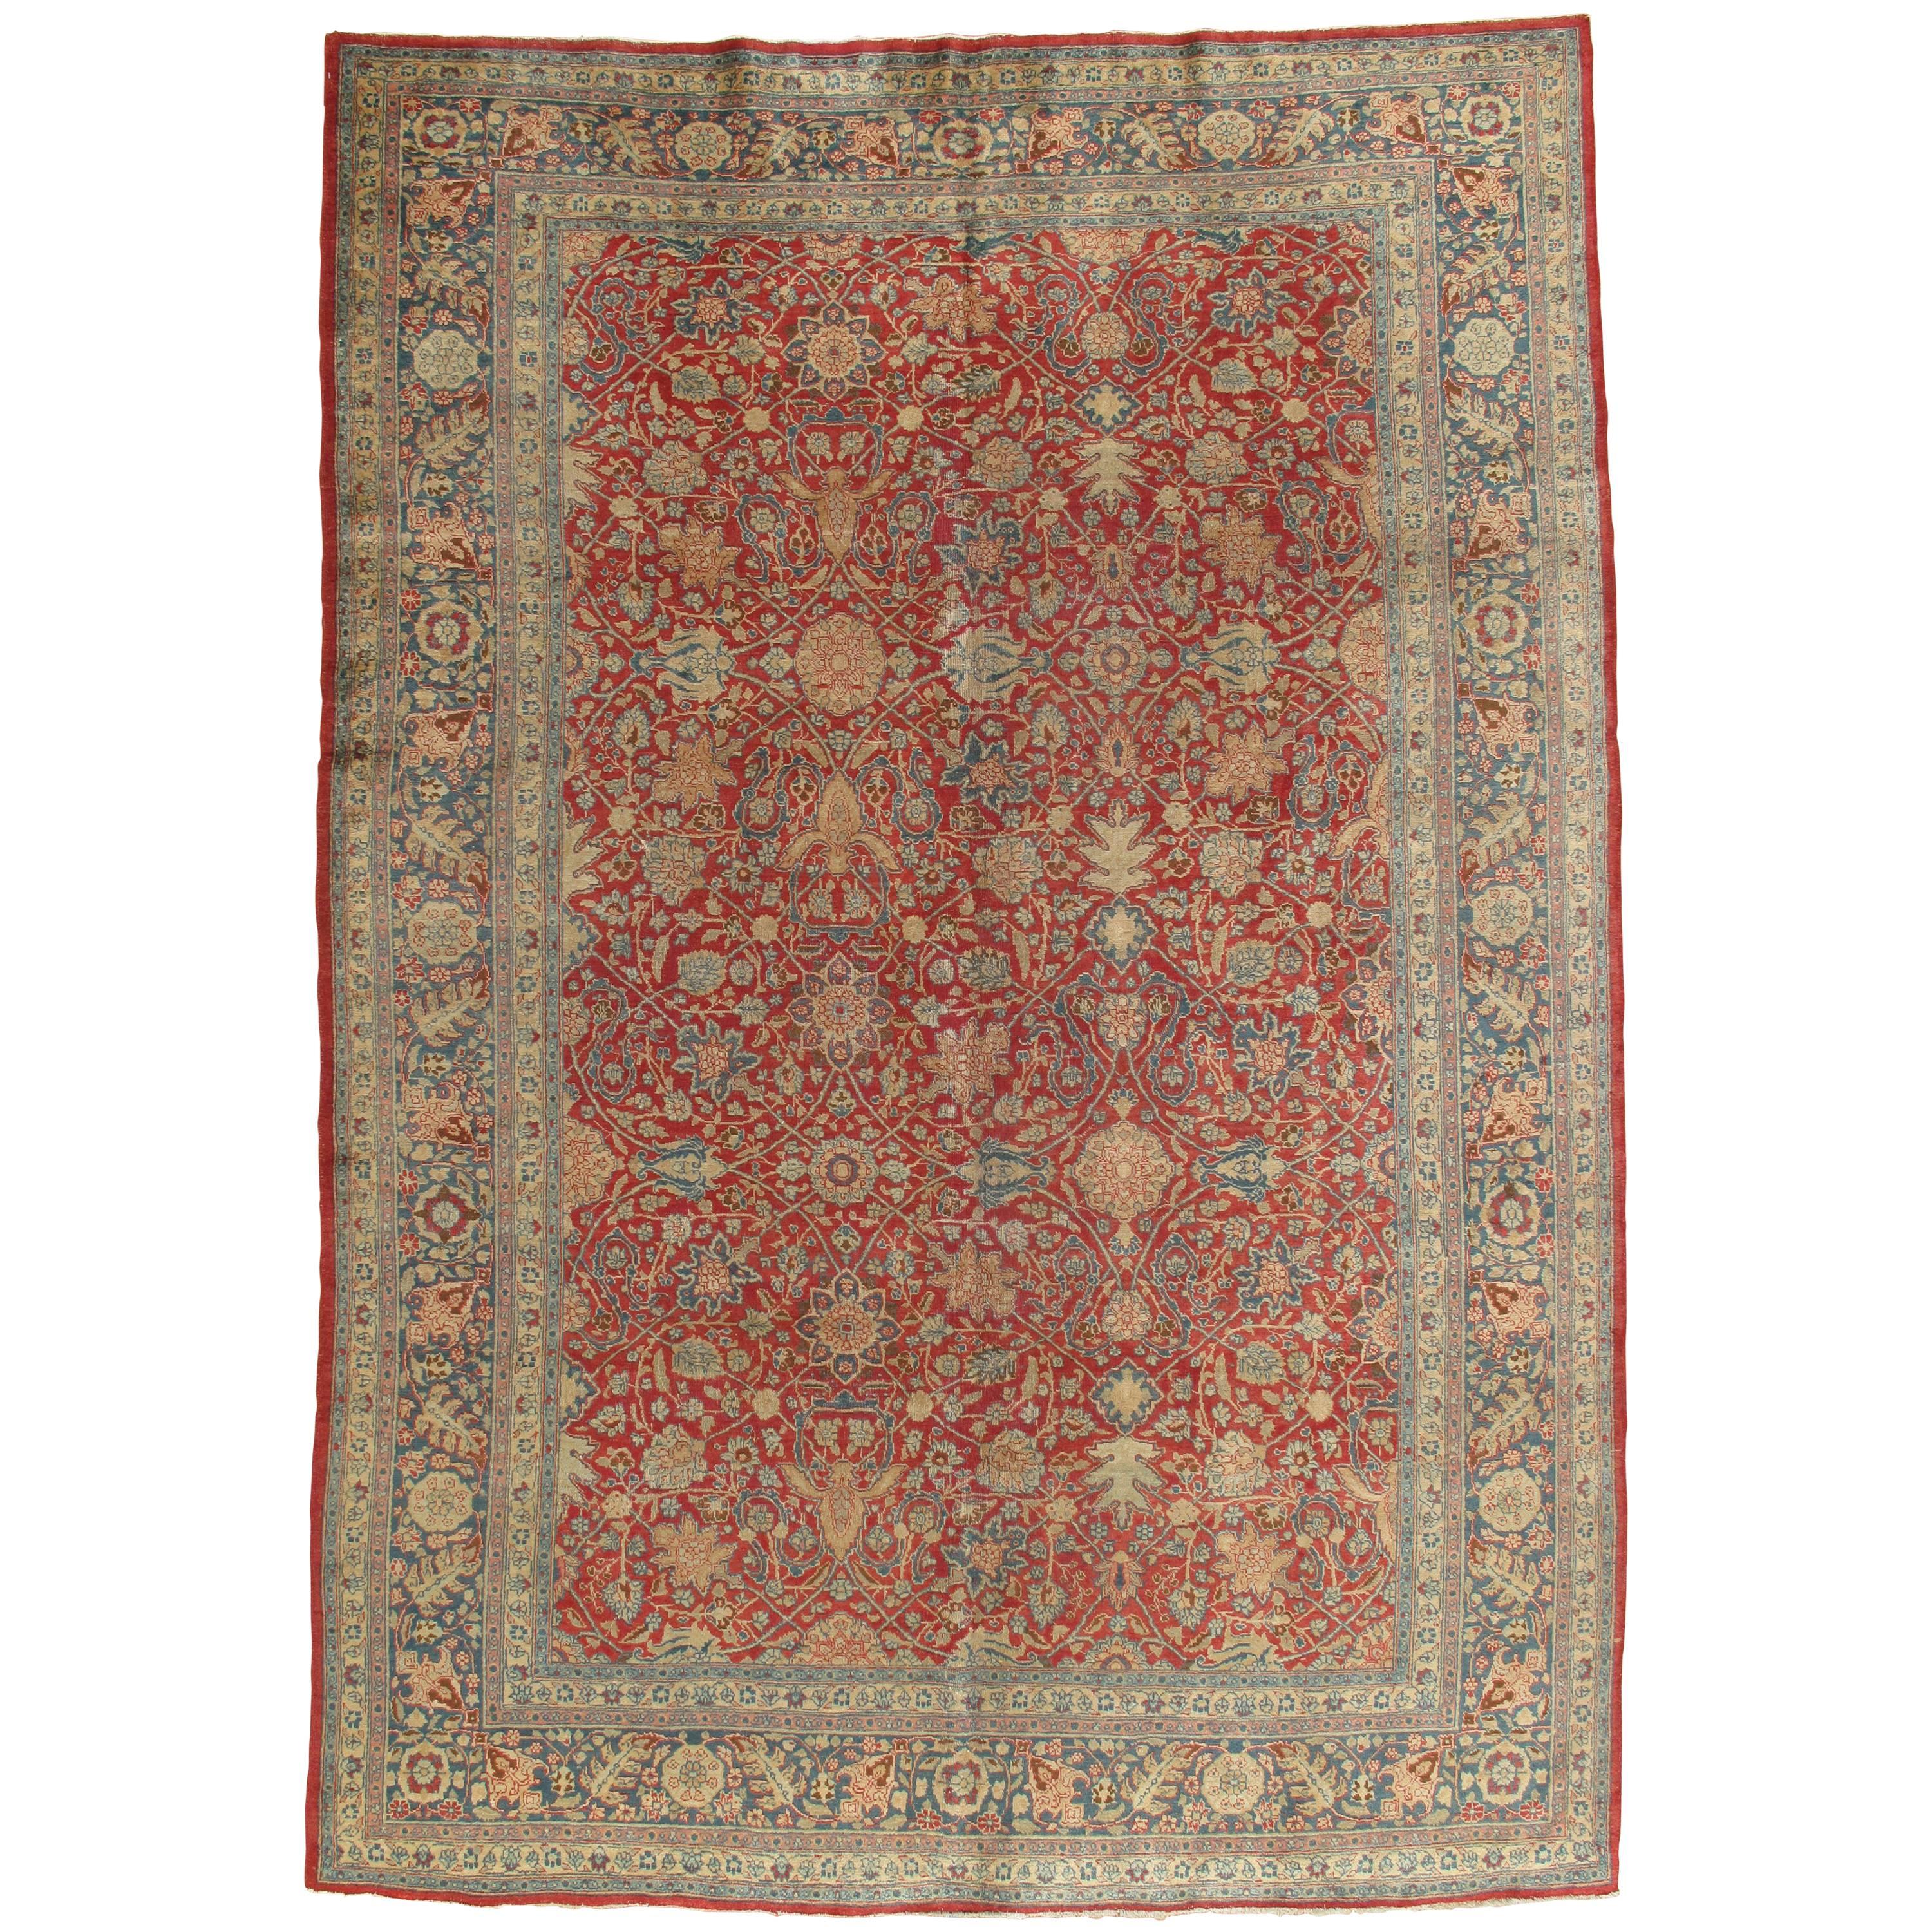 Antique Tabriz Carpet, Fine Oriental Rug, Hand Made, Red, Royal Blue Persian Rug